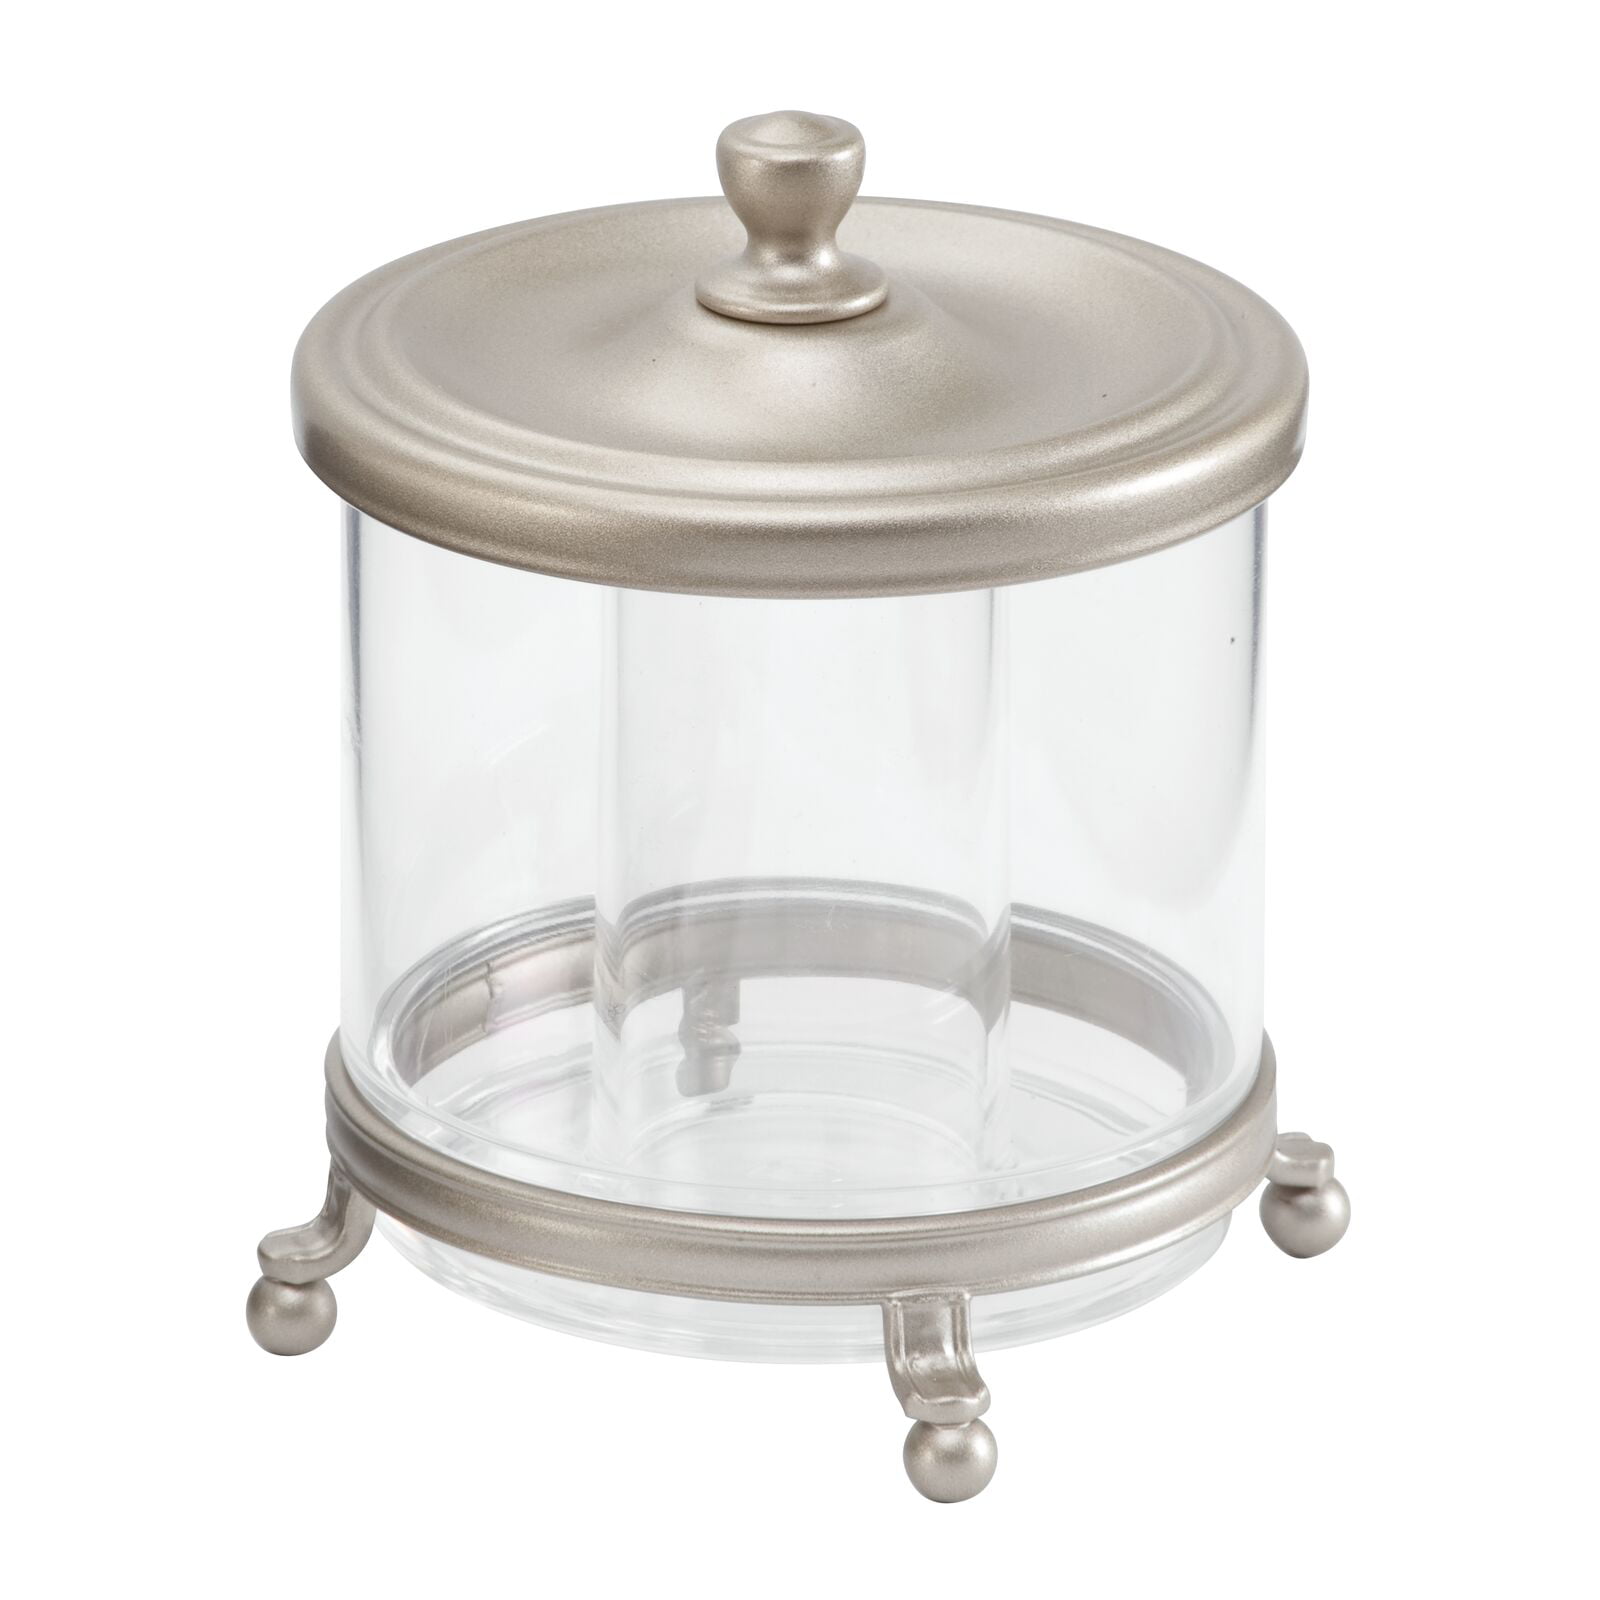 mDesign Modern Round Bathroom Vanity Countertop Storage Organizer Canister Jar for Cotton Swabs Bath Salts Clear/Bronze Makeup Sponges Balls Rounds 